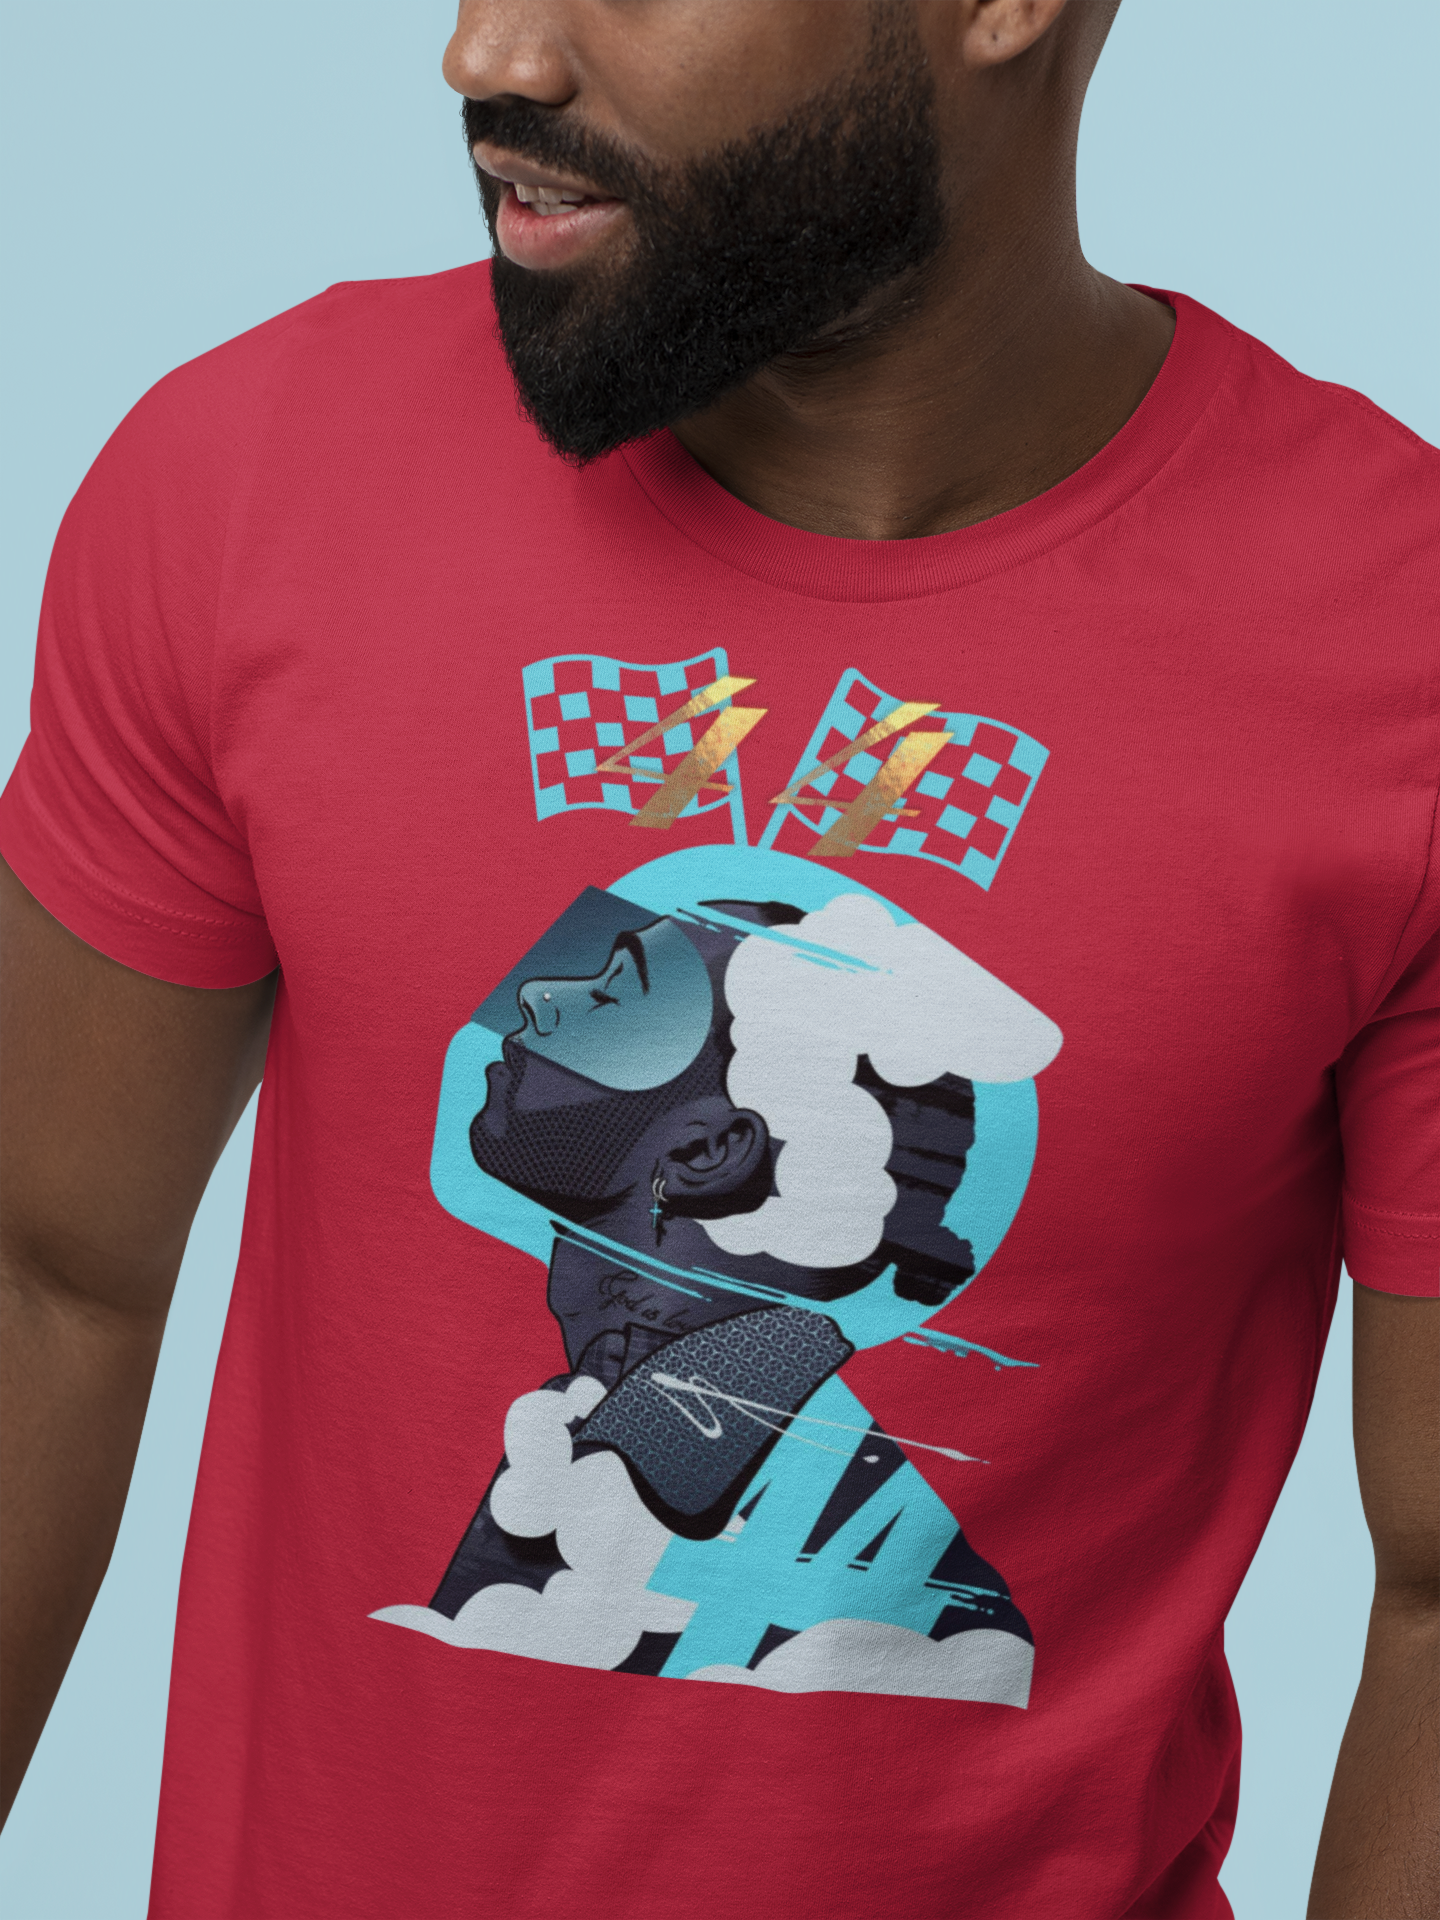 44 Lewis Hamilton - T-Shirt